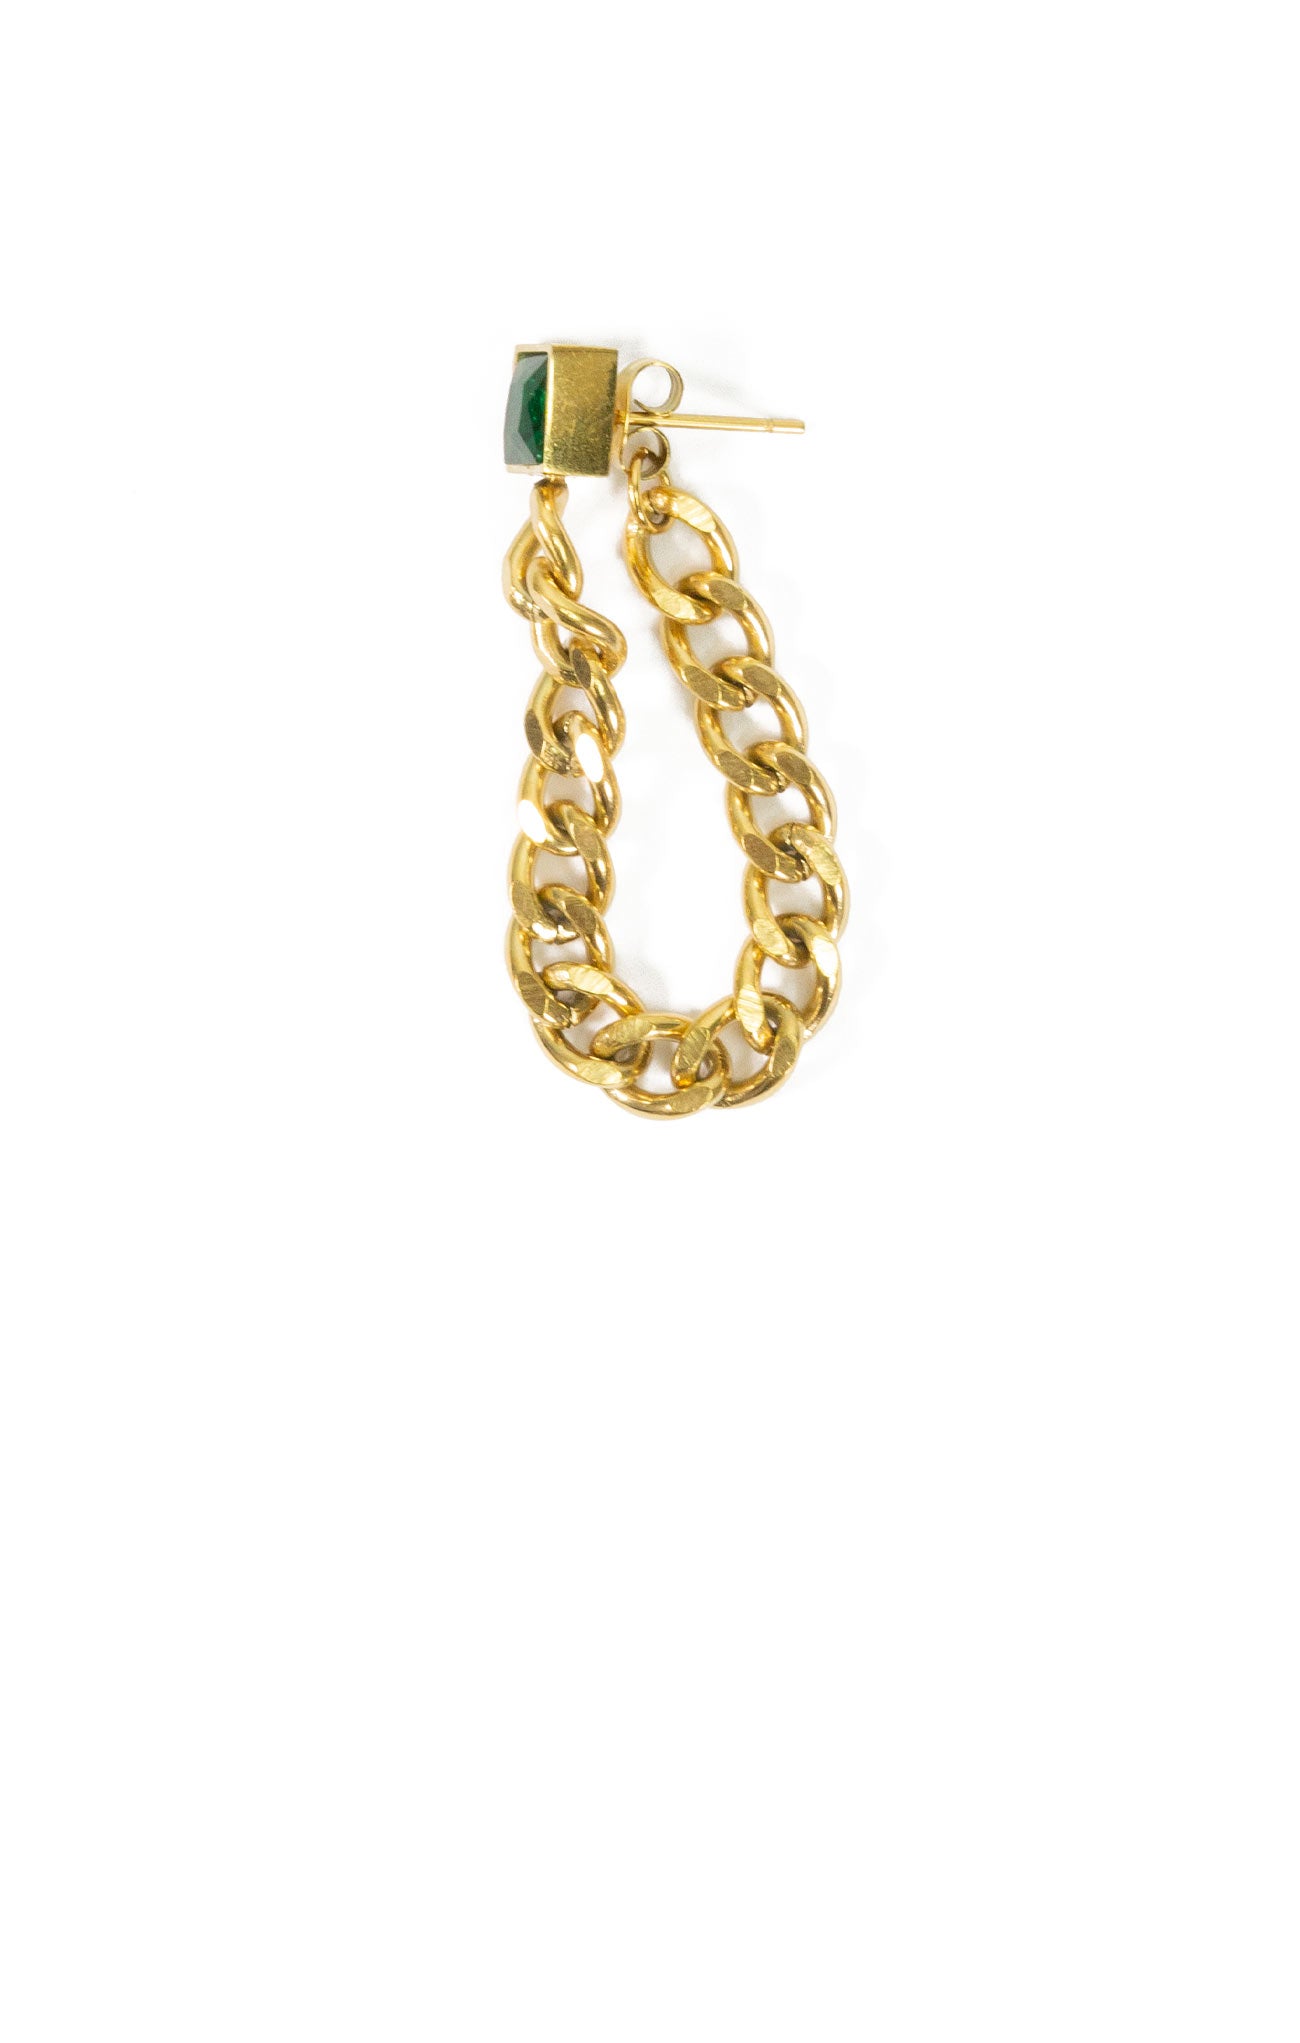 Emerald & Chain Studs